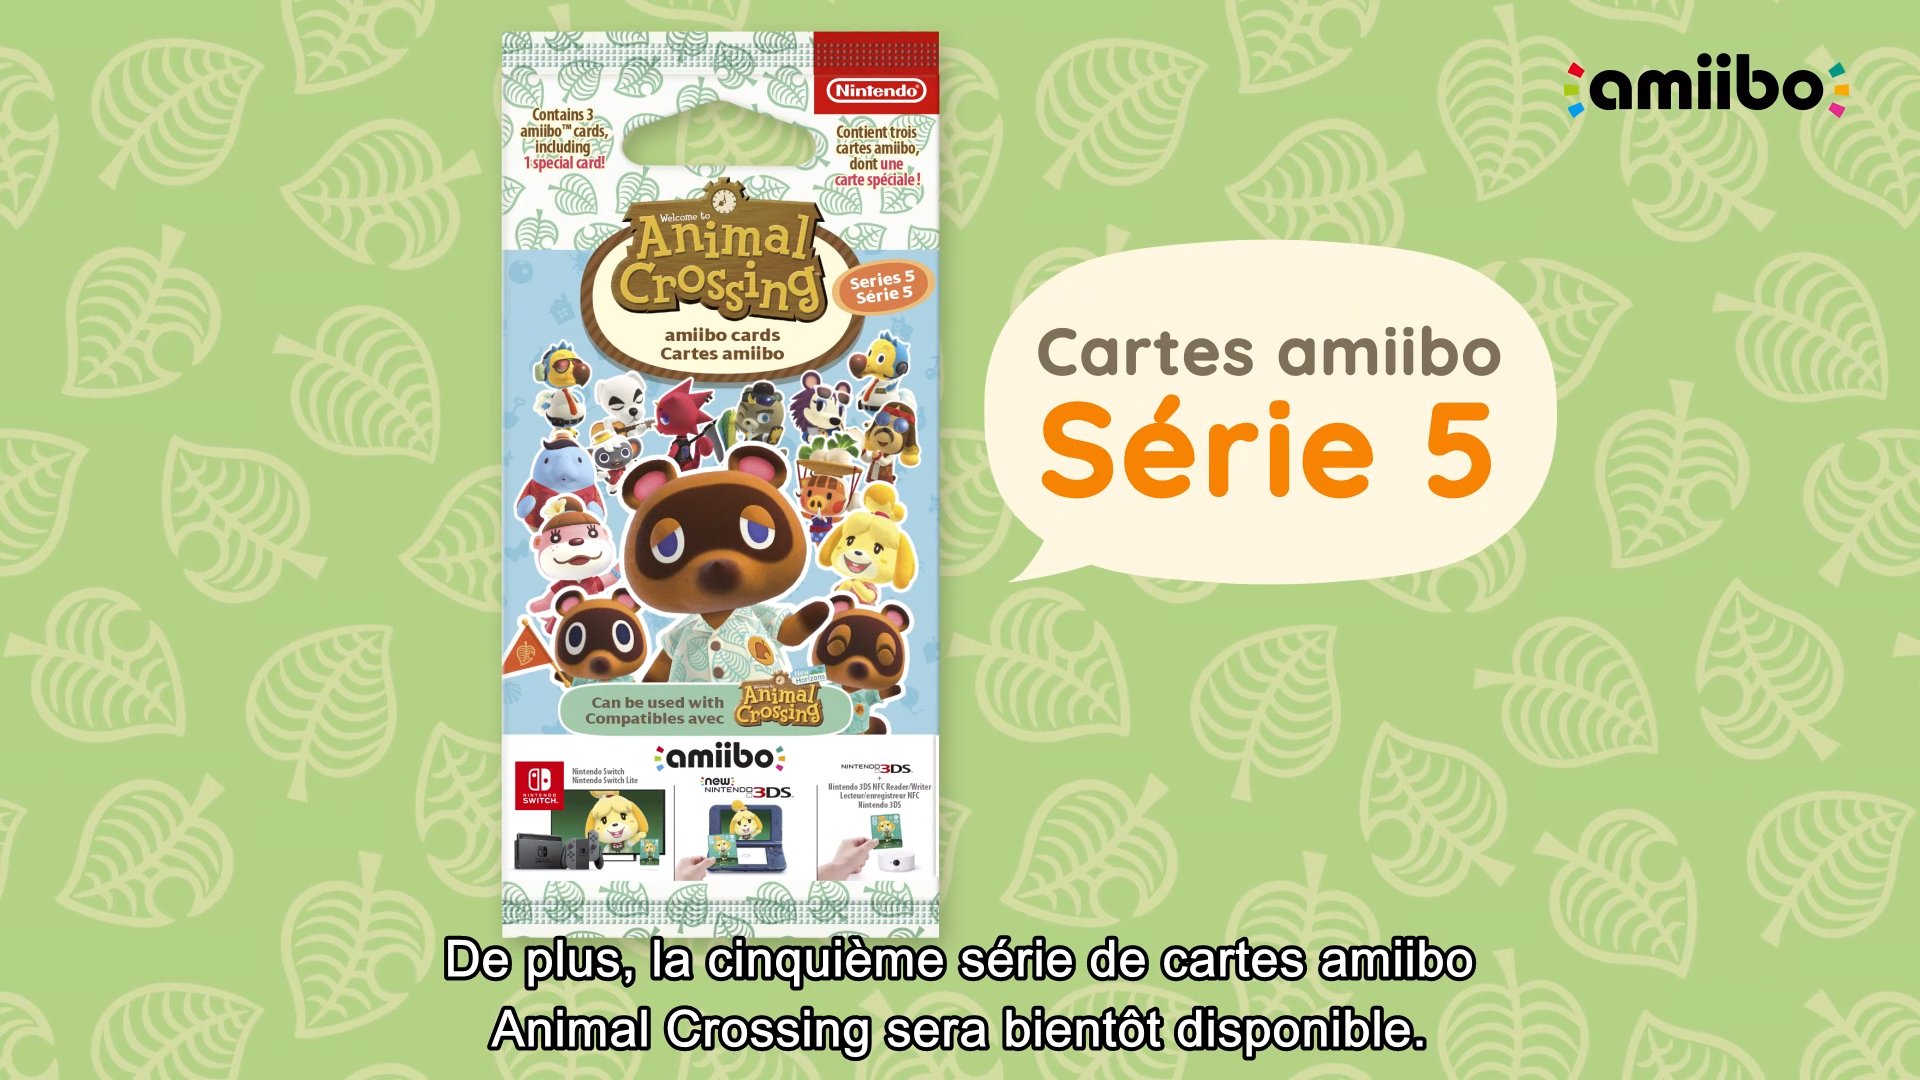 Nintendo Actu on X: La Série 5 des cartes amiibo Animal Crossing sera  disponible le 5 novembre, et comportera 48 nouvelles cartes ! # AnimalCrossing #ACNH  / X